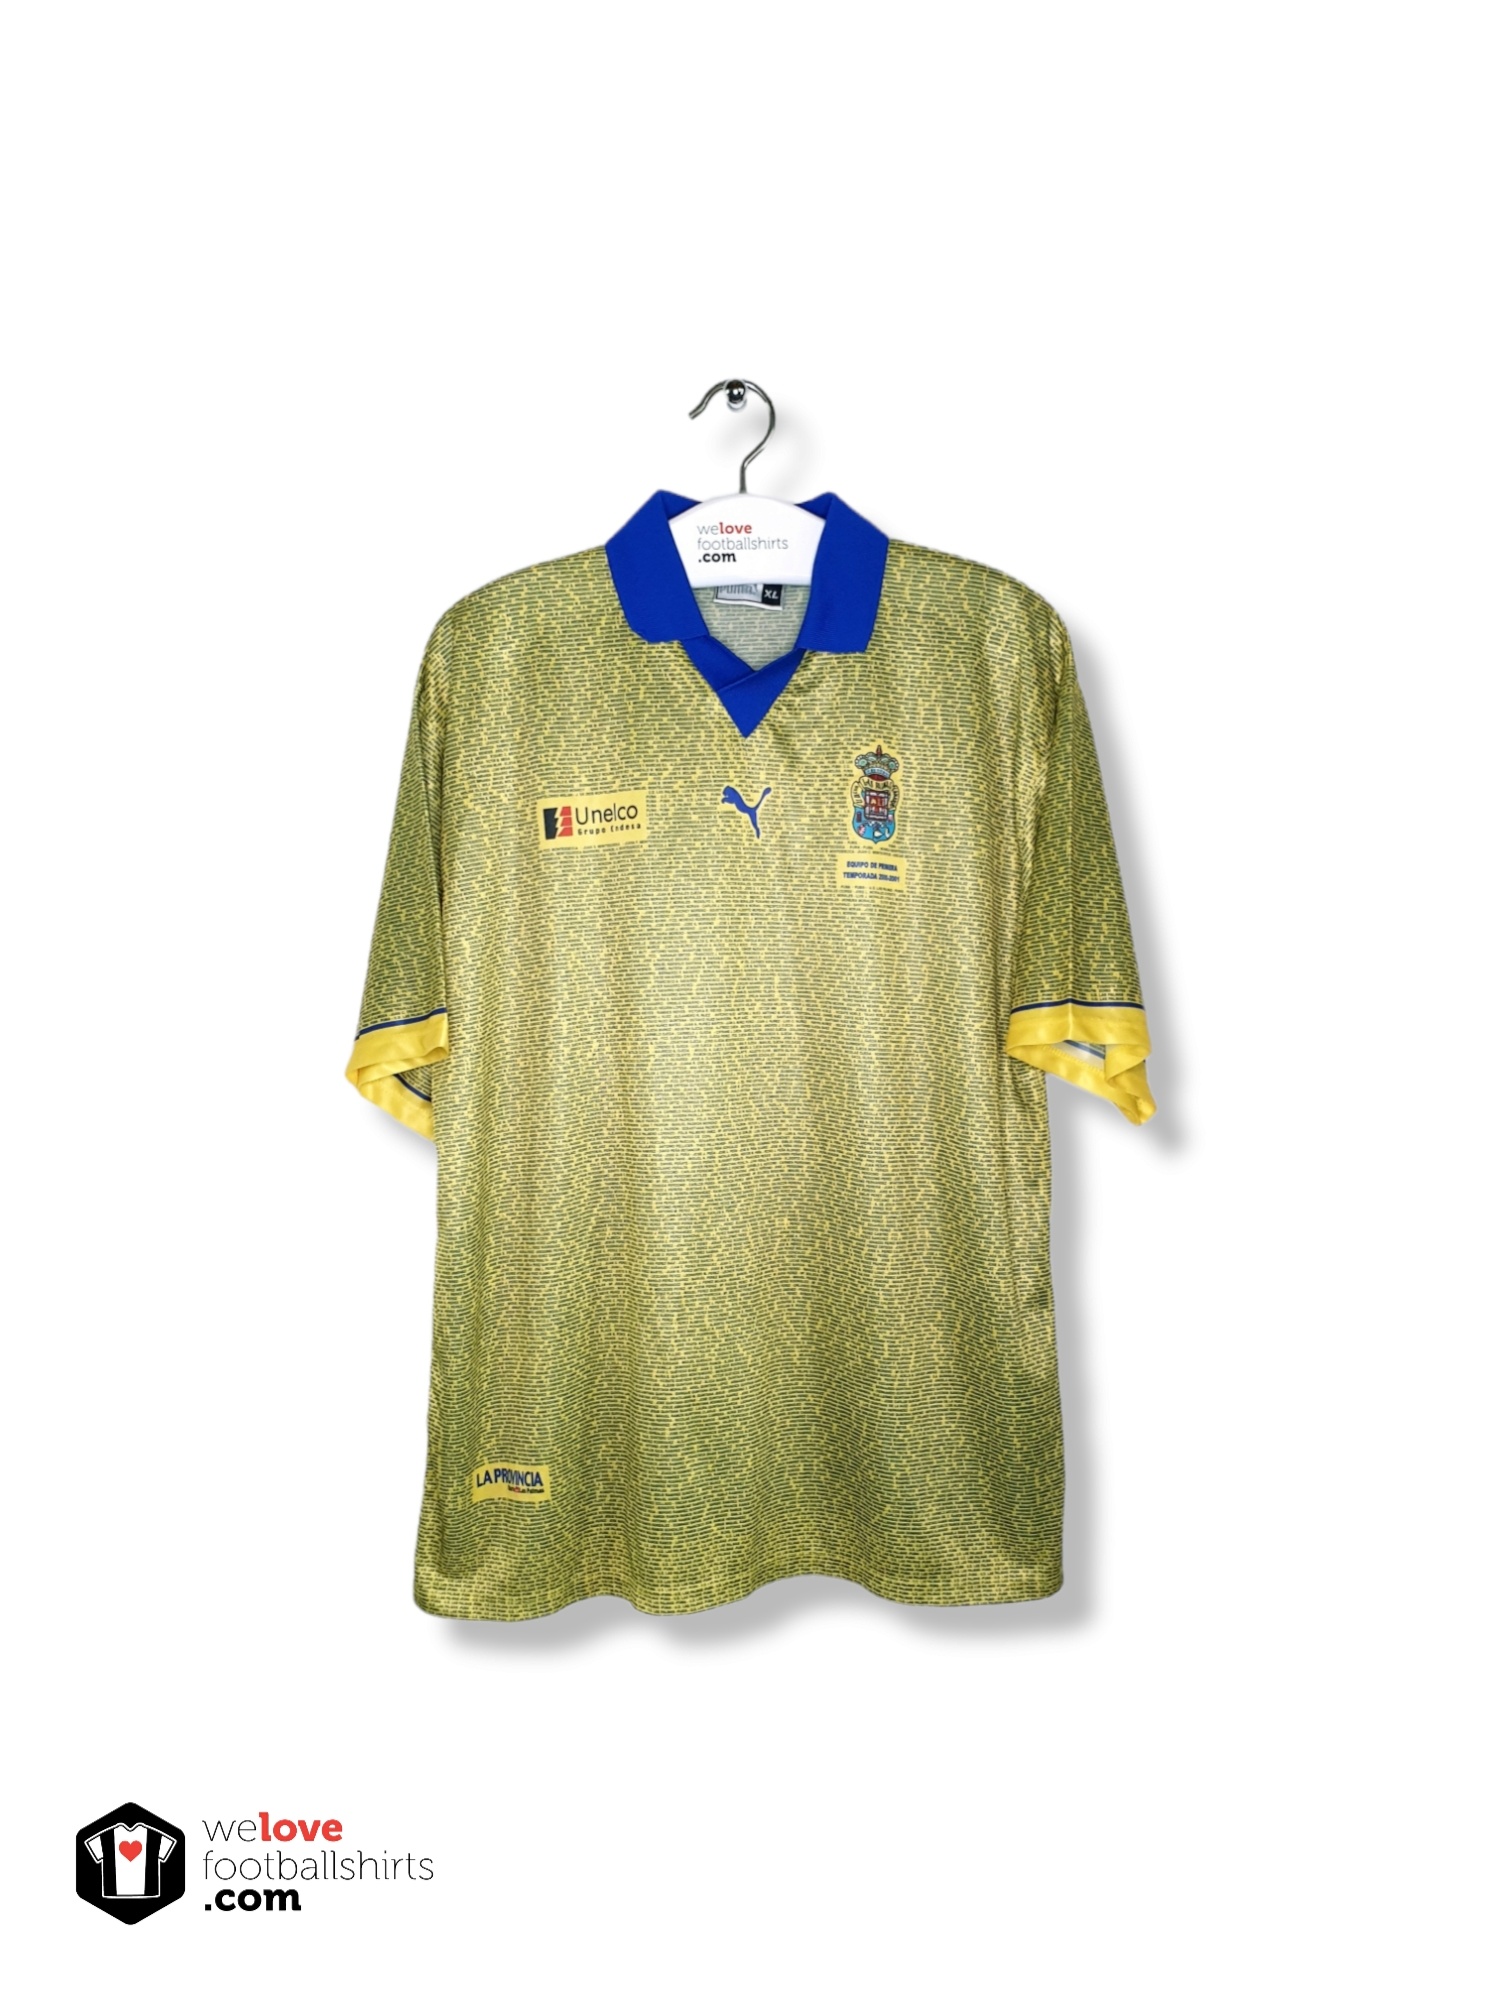 Puma Jubilee Football Shirt Las Palmas 2000/01 Welovefootballshirts.com